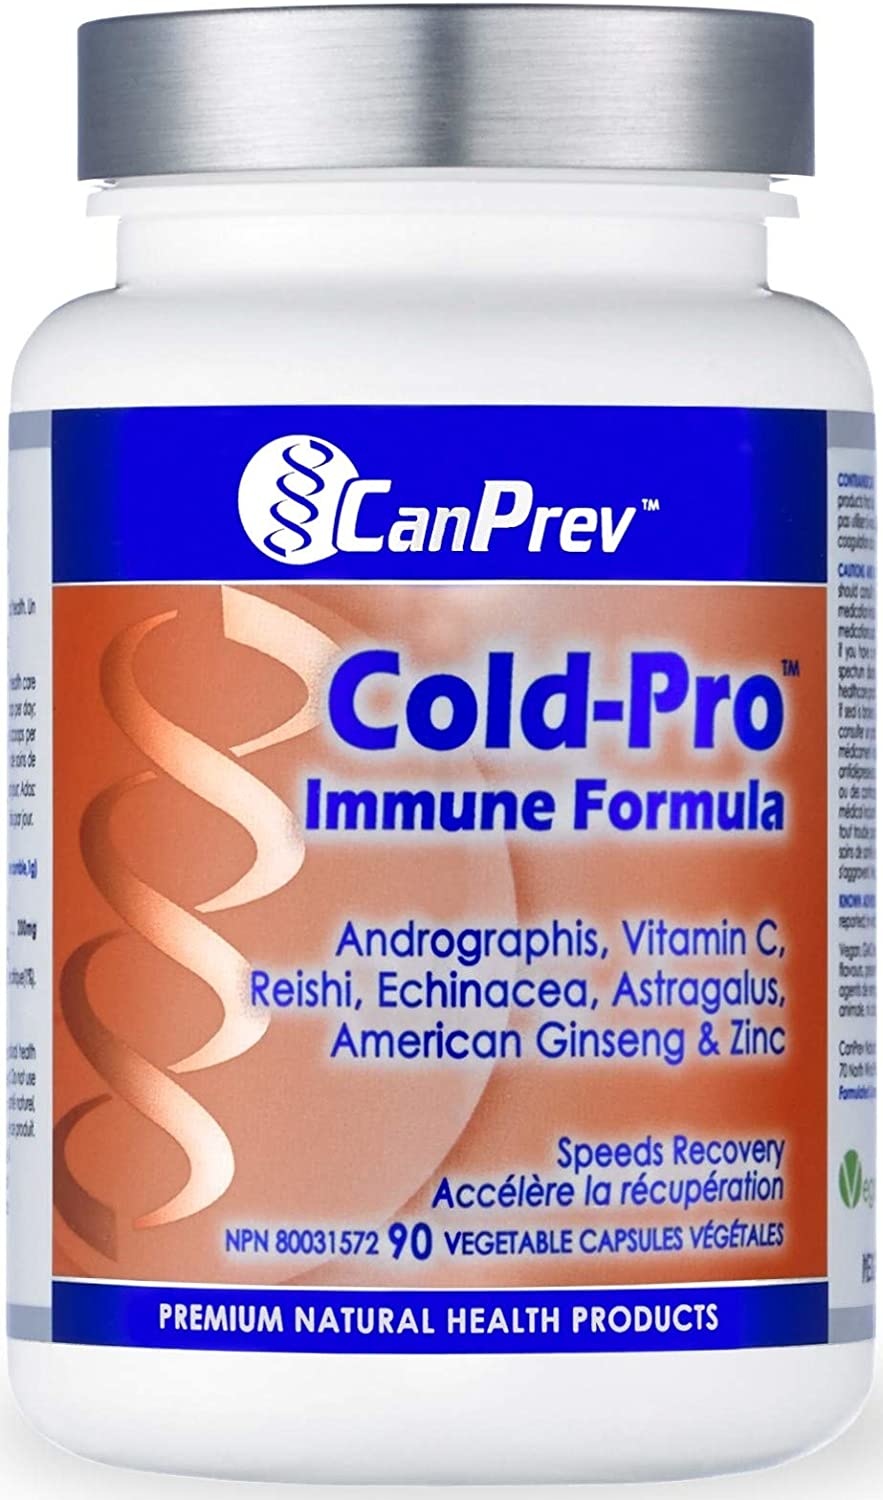 CanPrev CanPrev - Cold-Pro Immune Formula , 90 capsules végétales